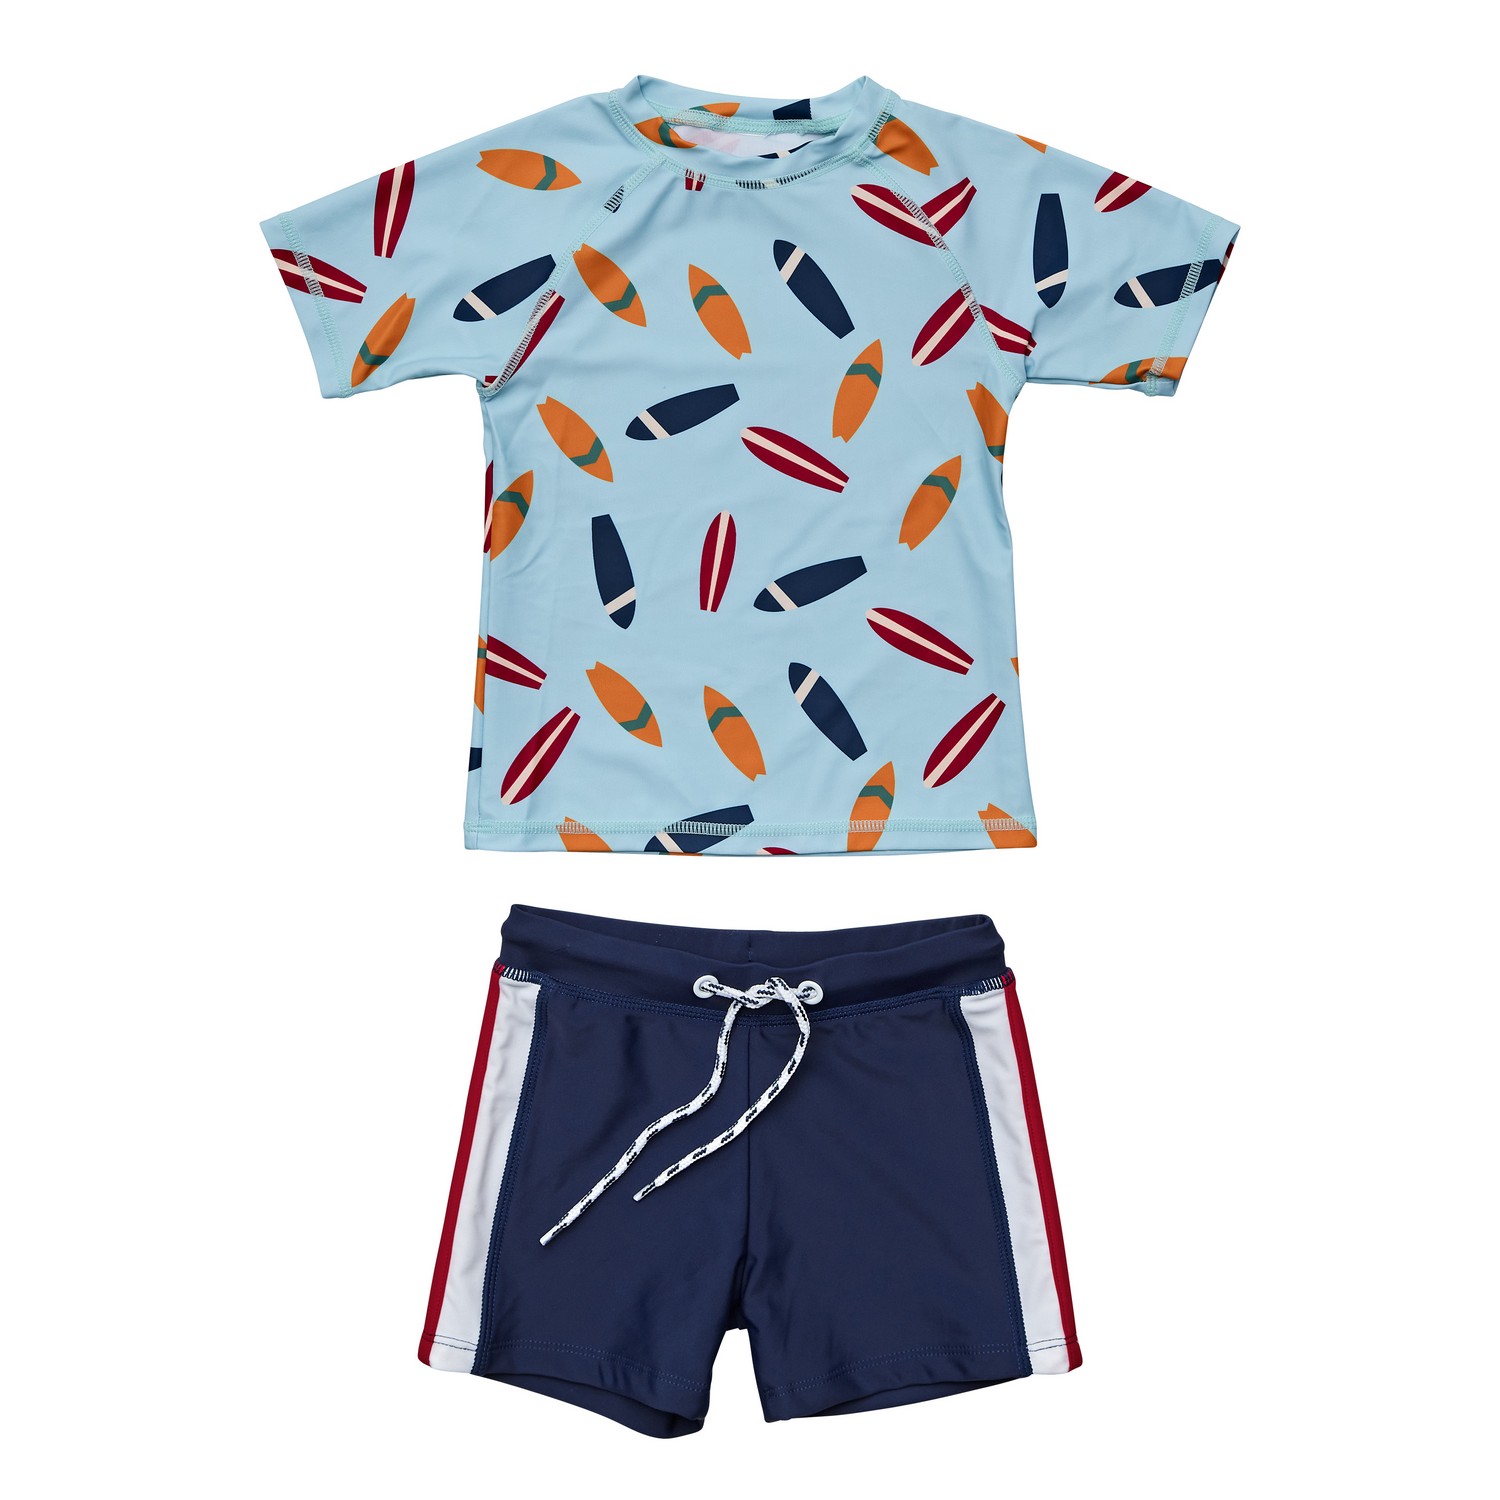 Snapper Rock - UV Swimset for babies and kids - Short sleeve - Retro Surf - Blue/Navy